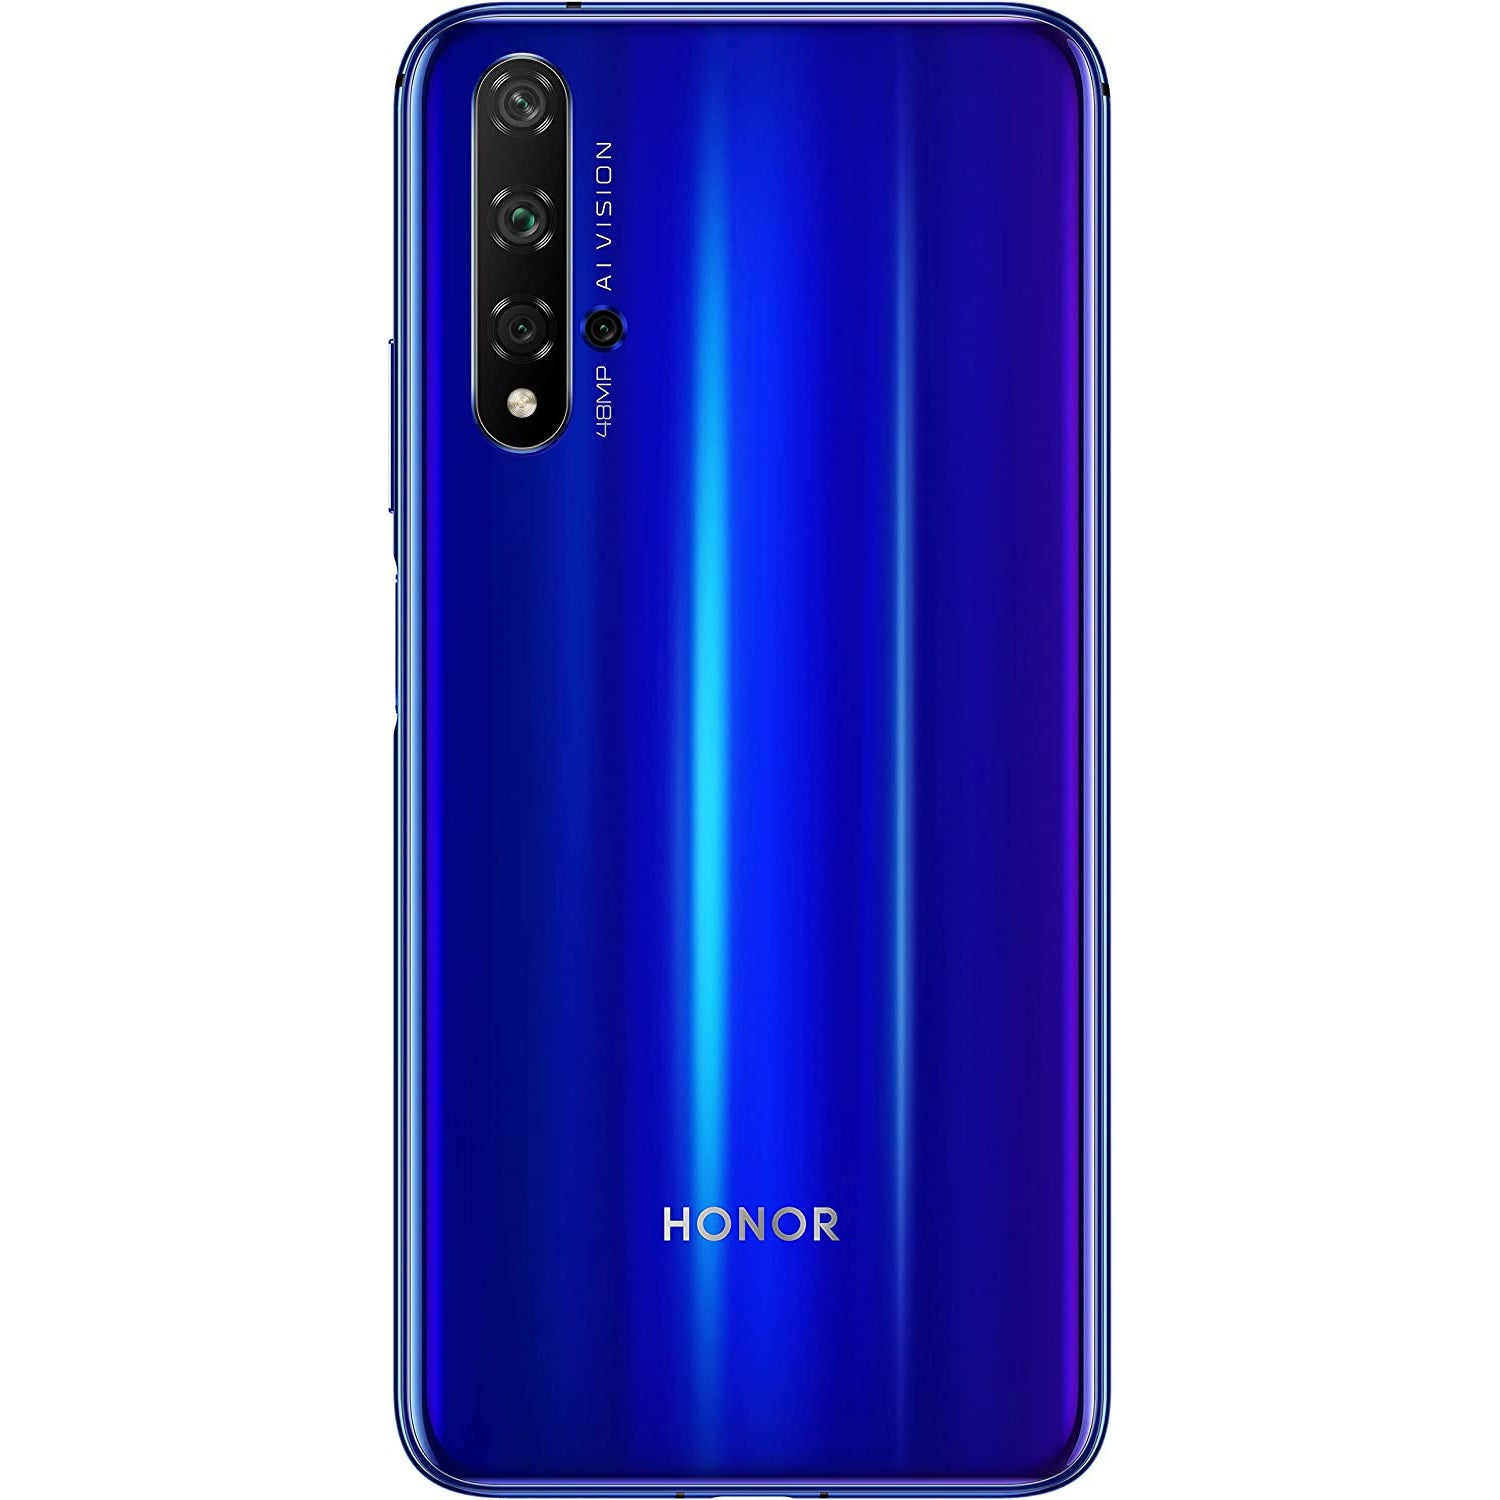 Honor View20 Smartphone, 6GB RAM, Sim Free, 128GB, Sapphire Blue - Brand New